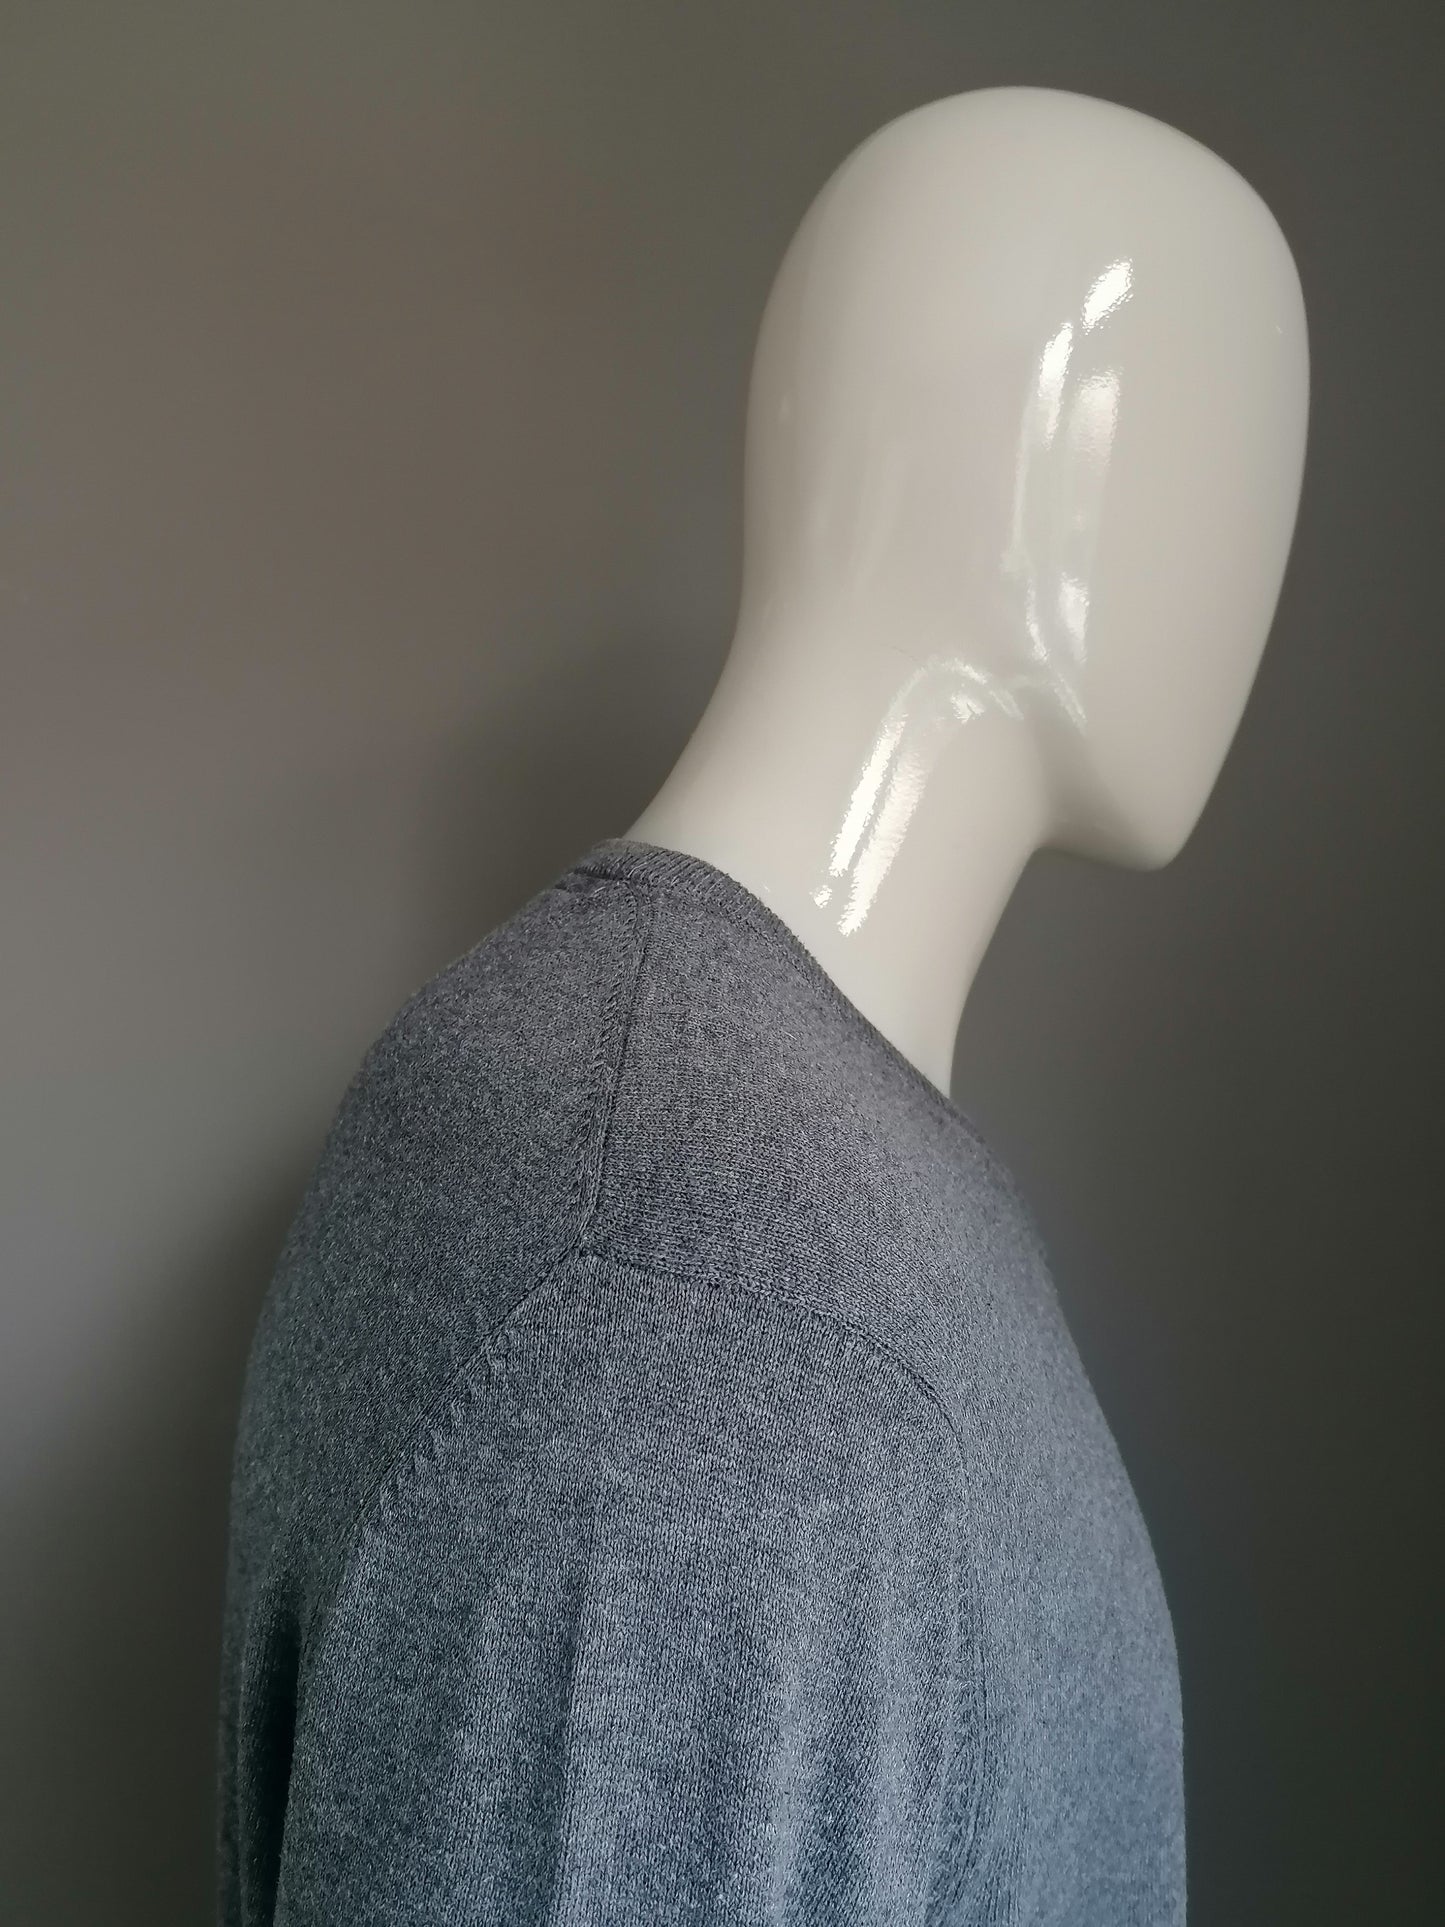 Miller & Monroe cotton sweater with V-neck. Dark gray. Size XL.